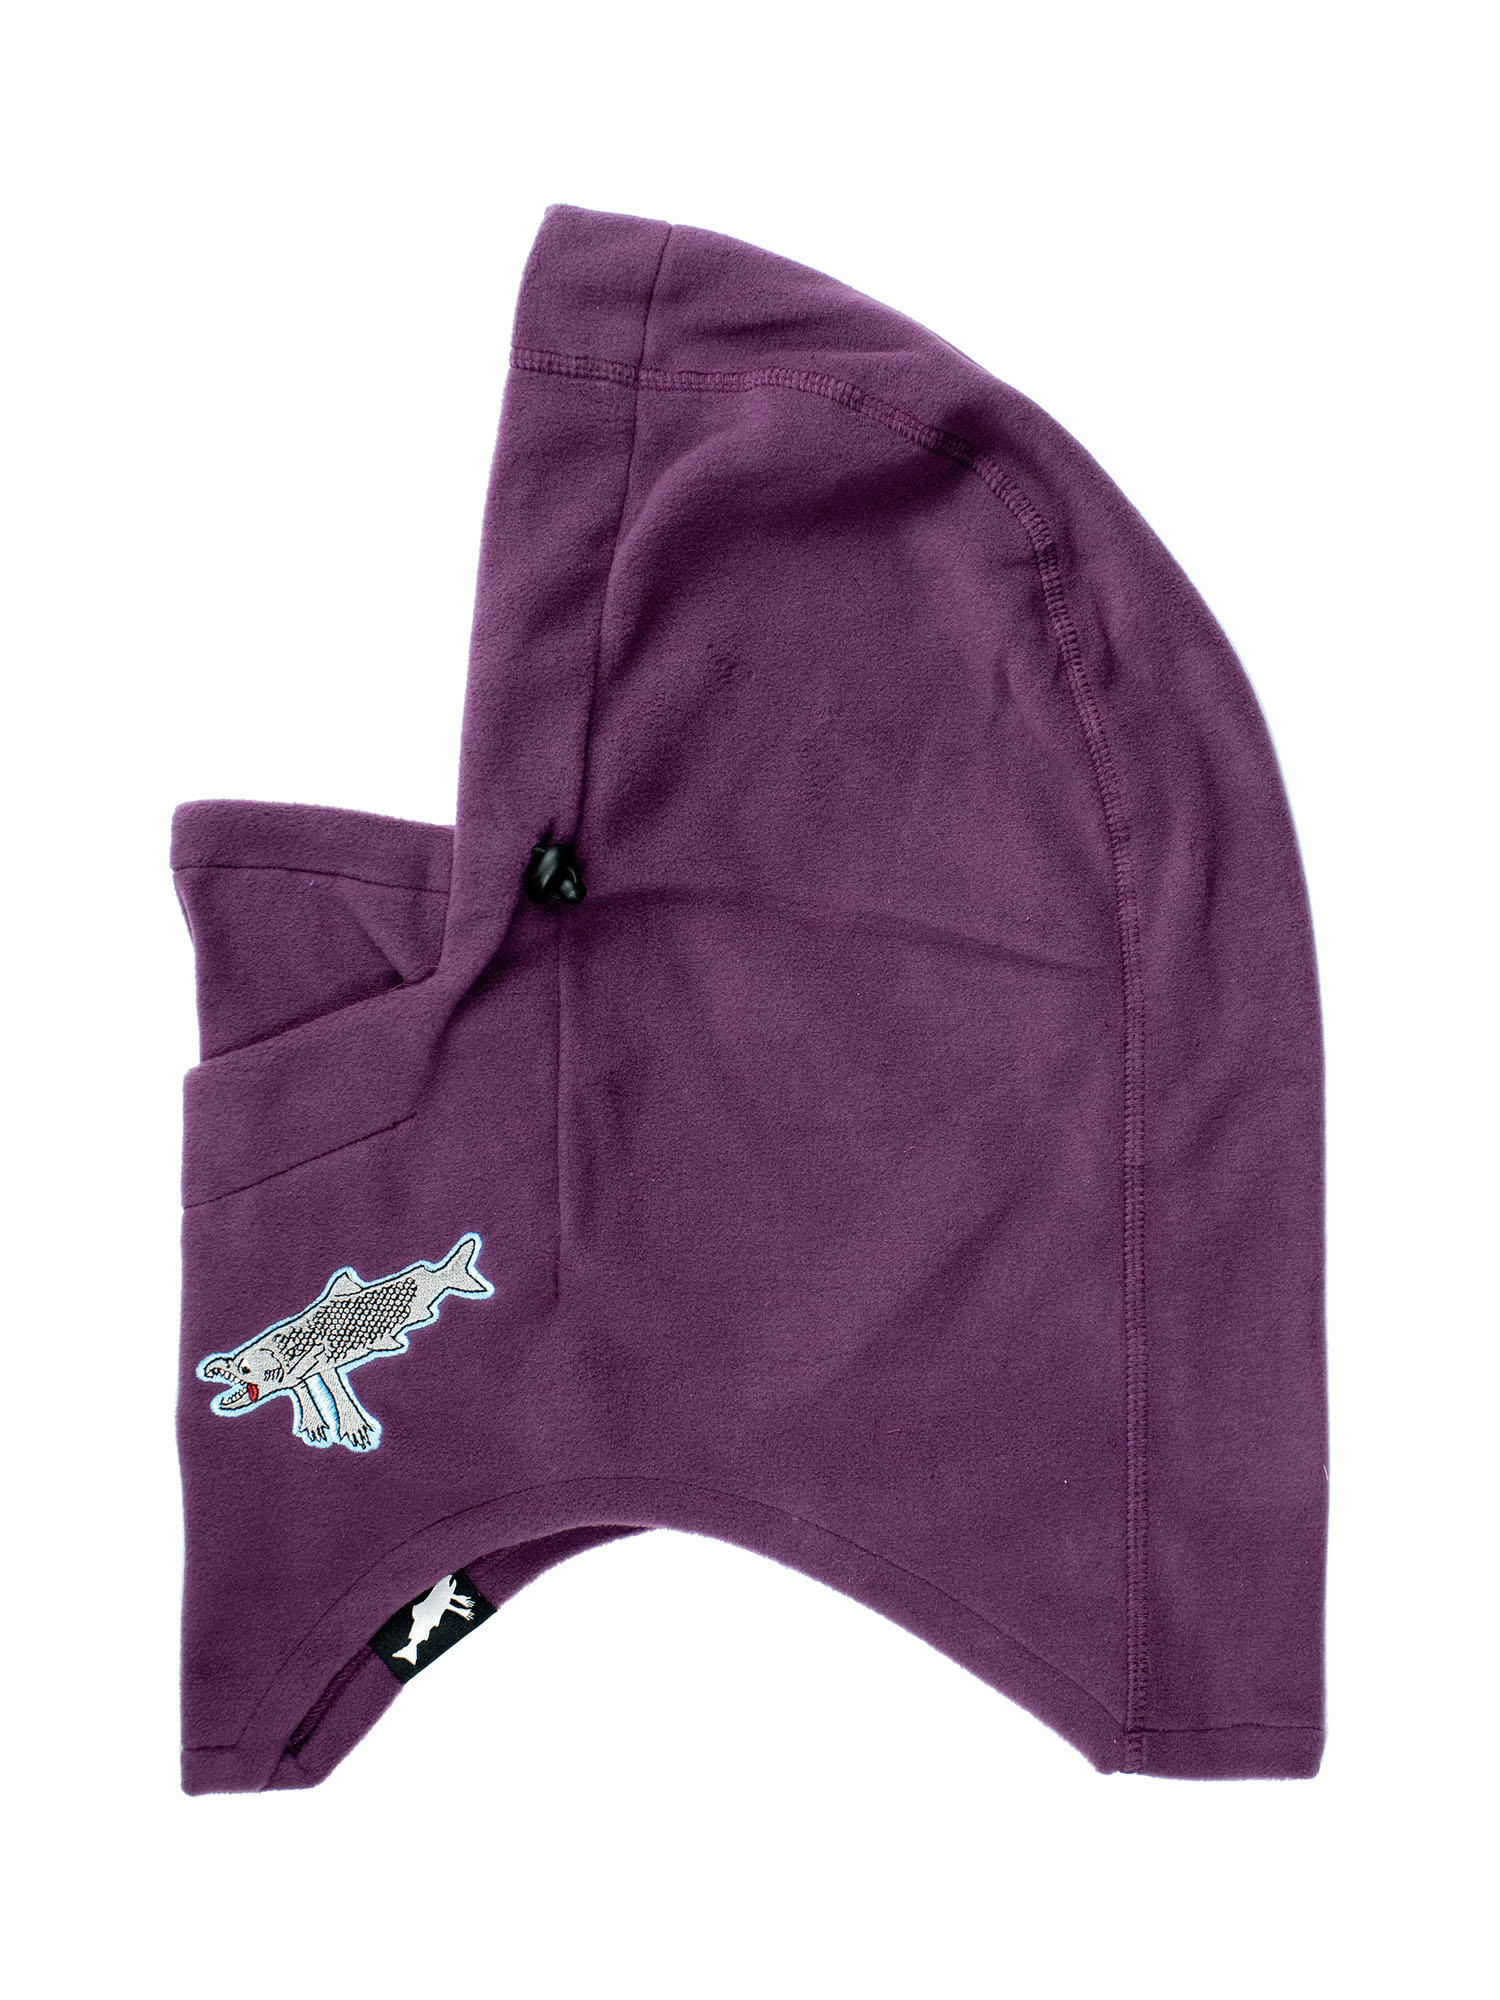 Балаклава мужская Salmon Arms Fleece Hoods фиолетовая, one size